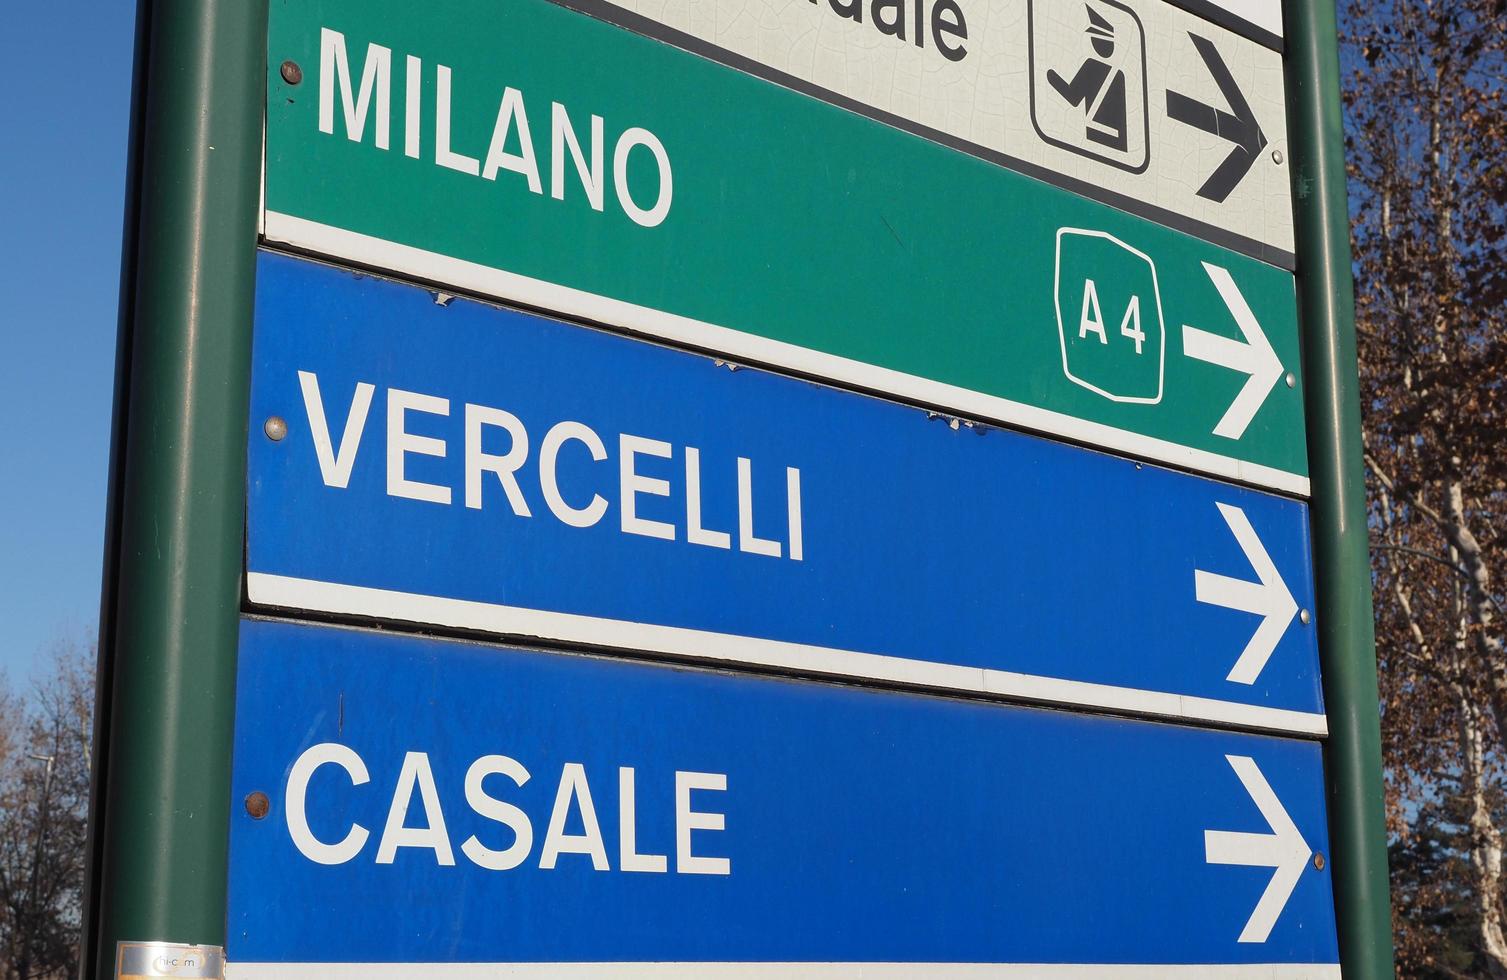 Milan Vercelli Casale direction sign photo